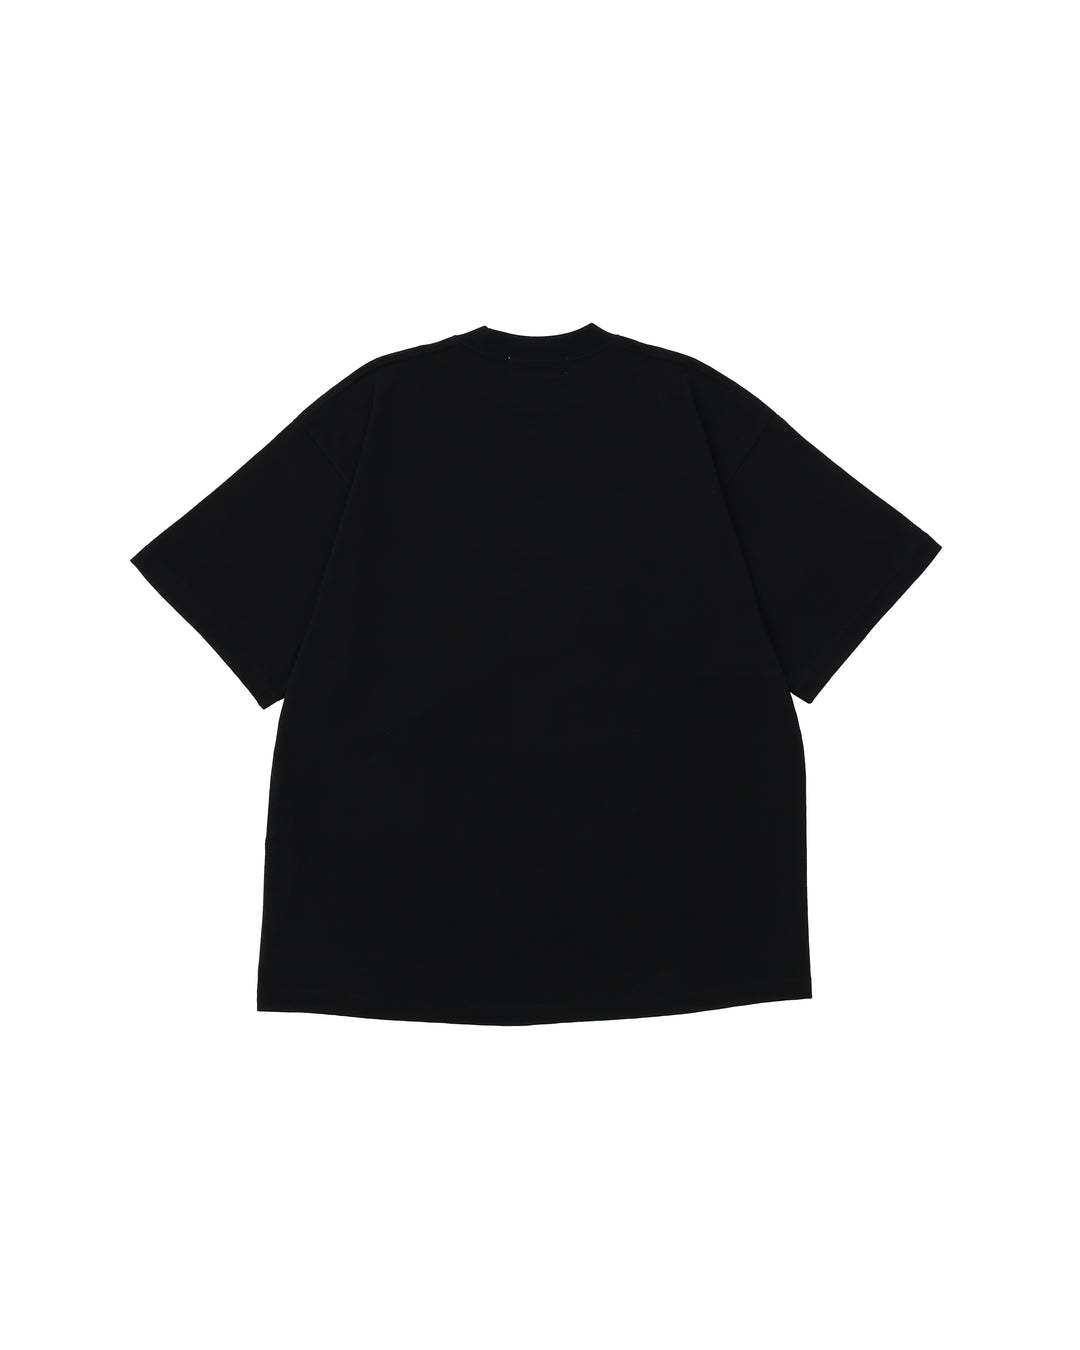 Mistake s/s T-Shirts “Ketchup boy” / Black